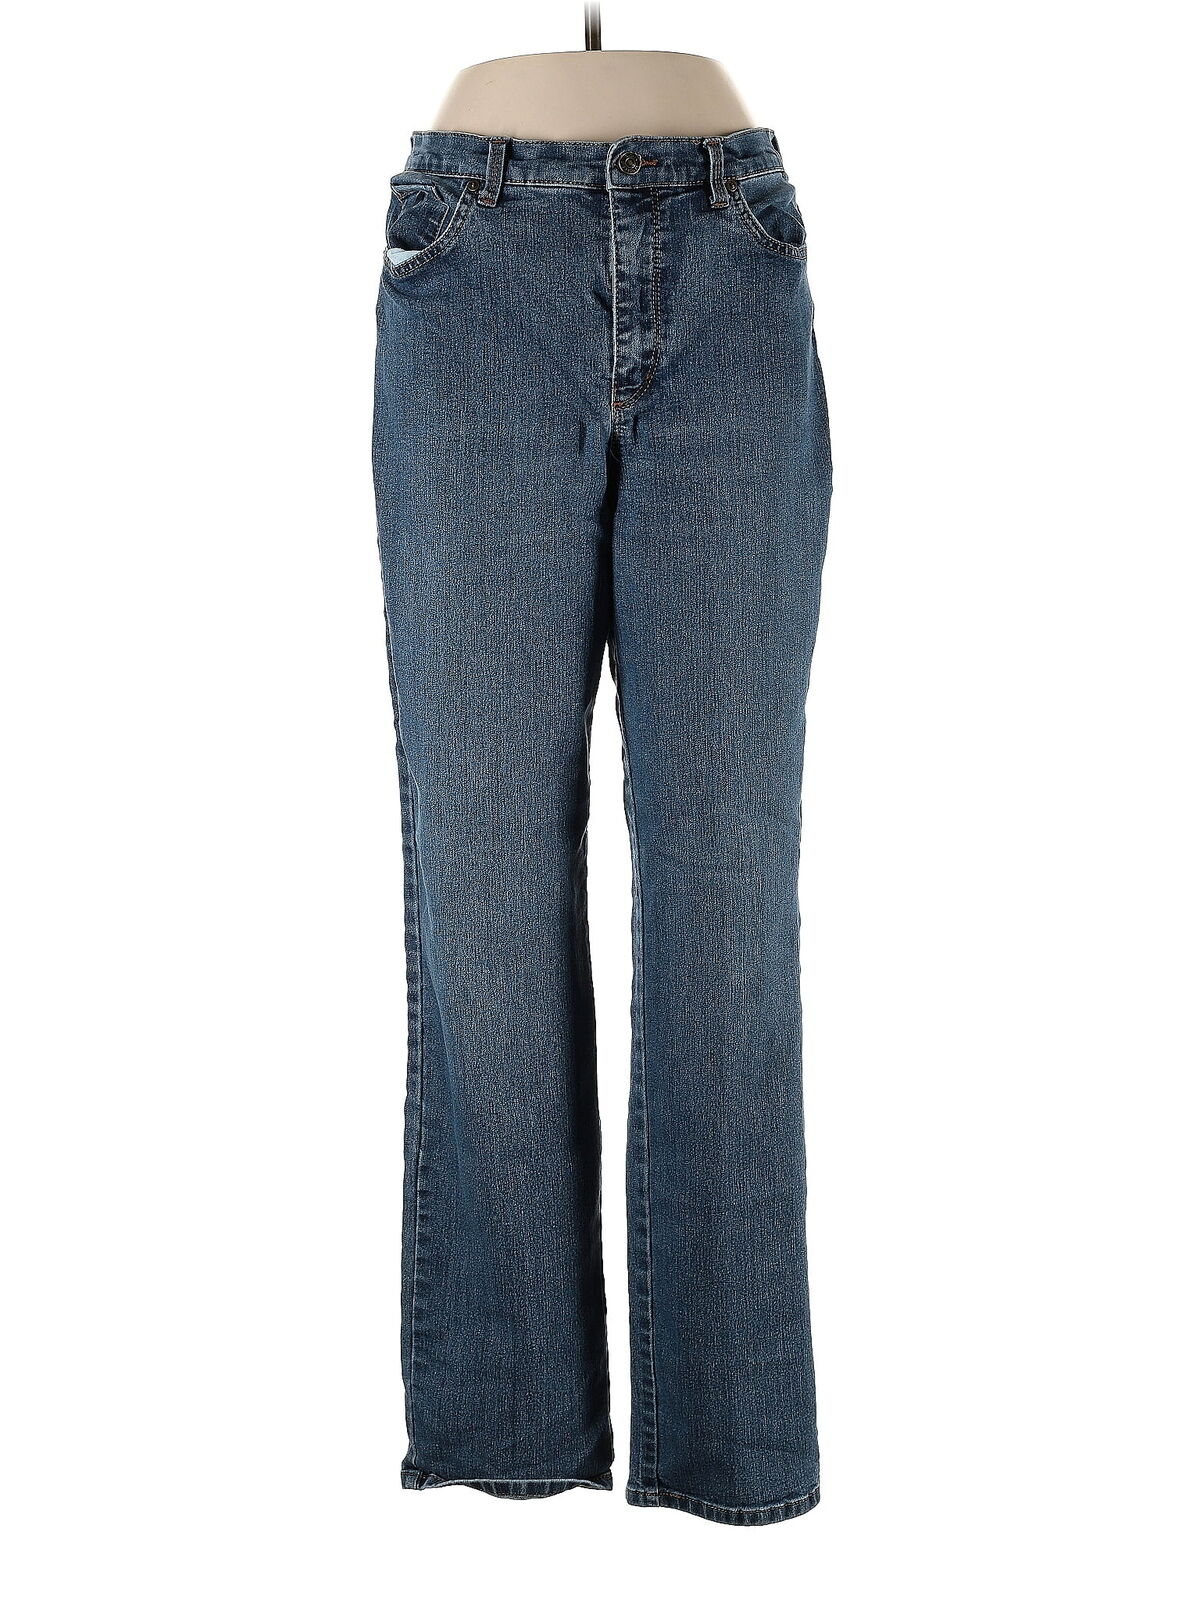 Gloria Vanderbilt Women Blue Jeans 10 - image 1